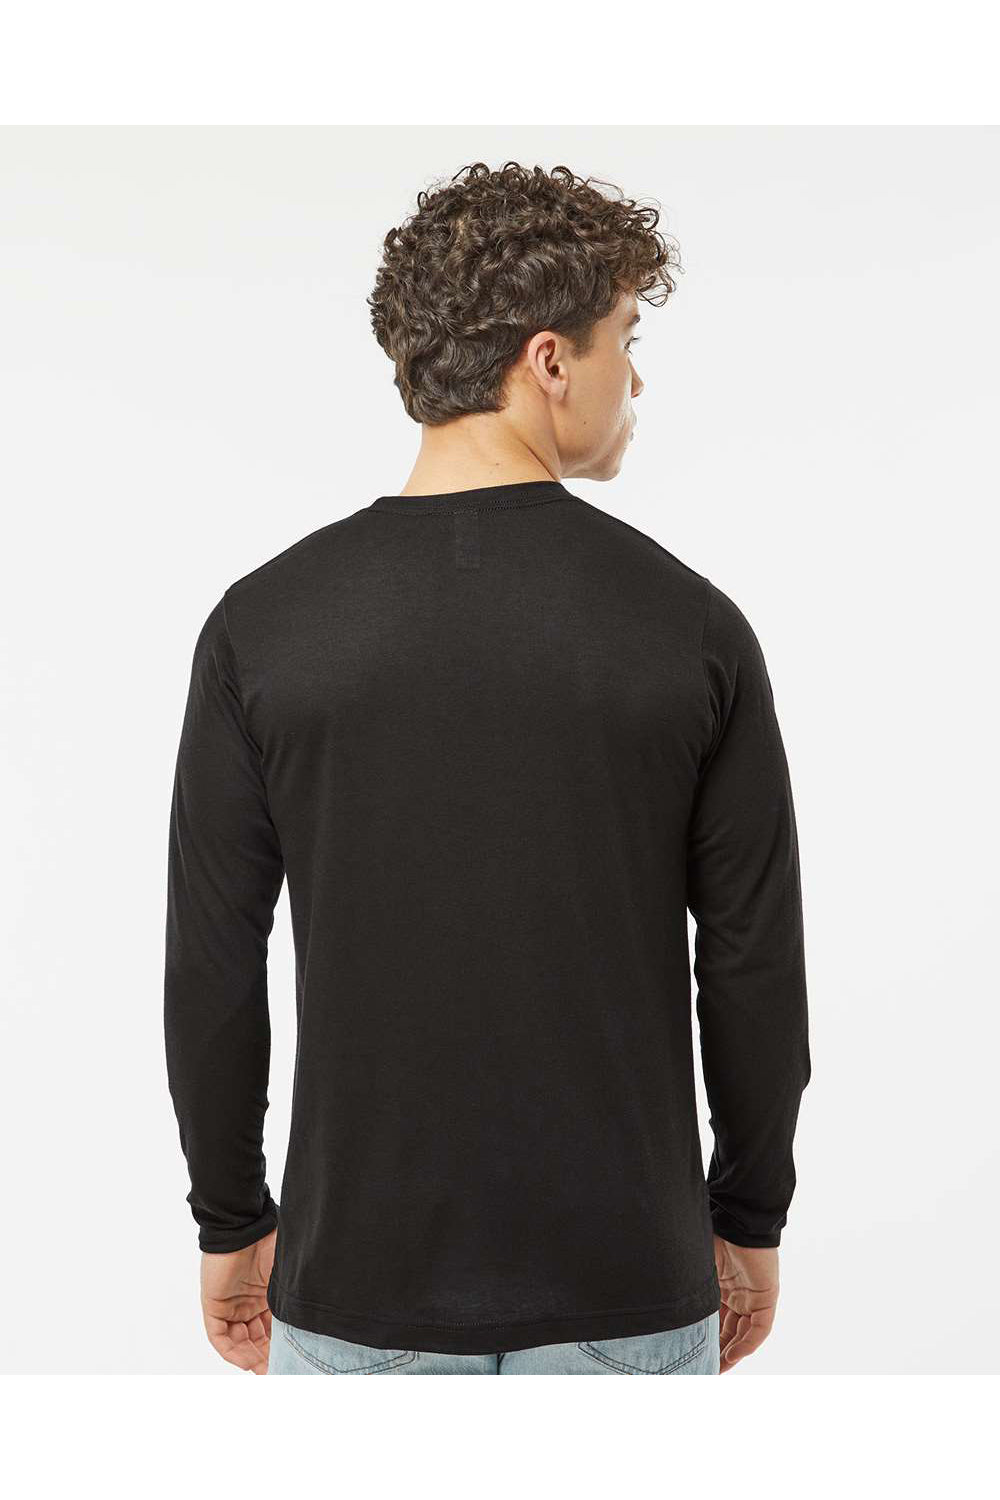 Tultex 242 Mens Poly-Rich Long Sleeve Crewneck T-Shirt Black Model Back